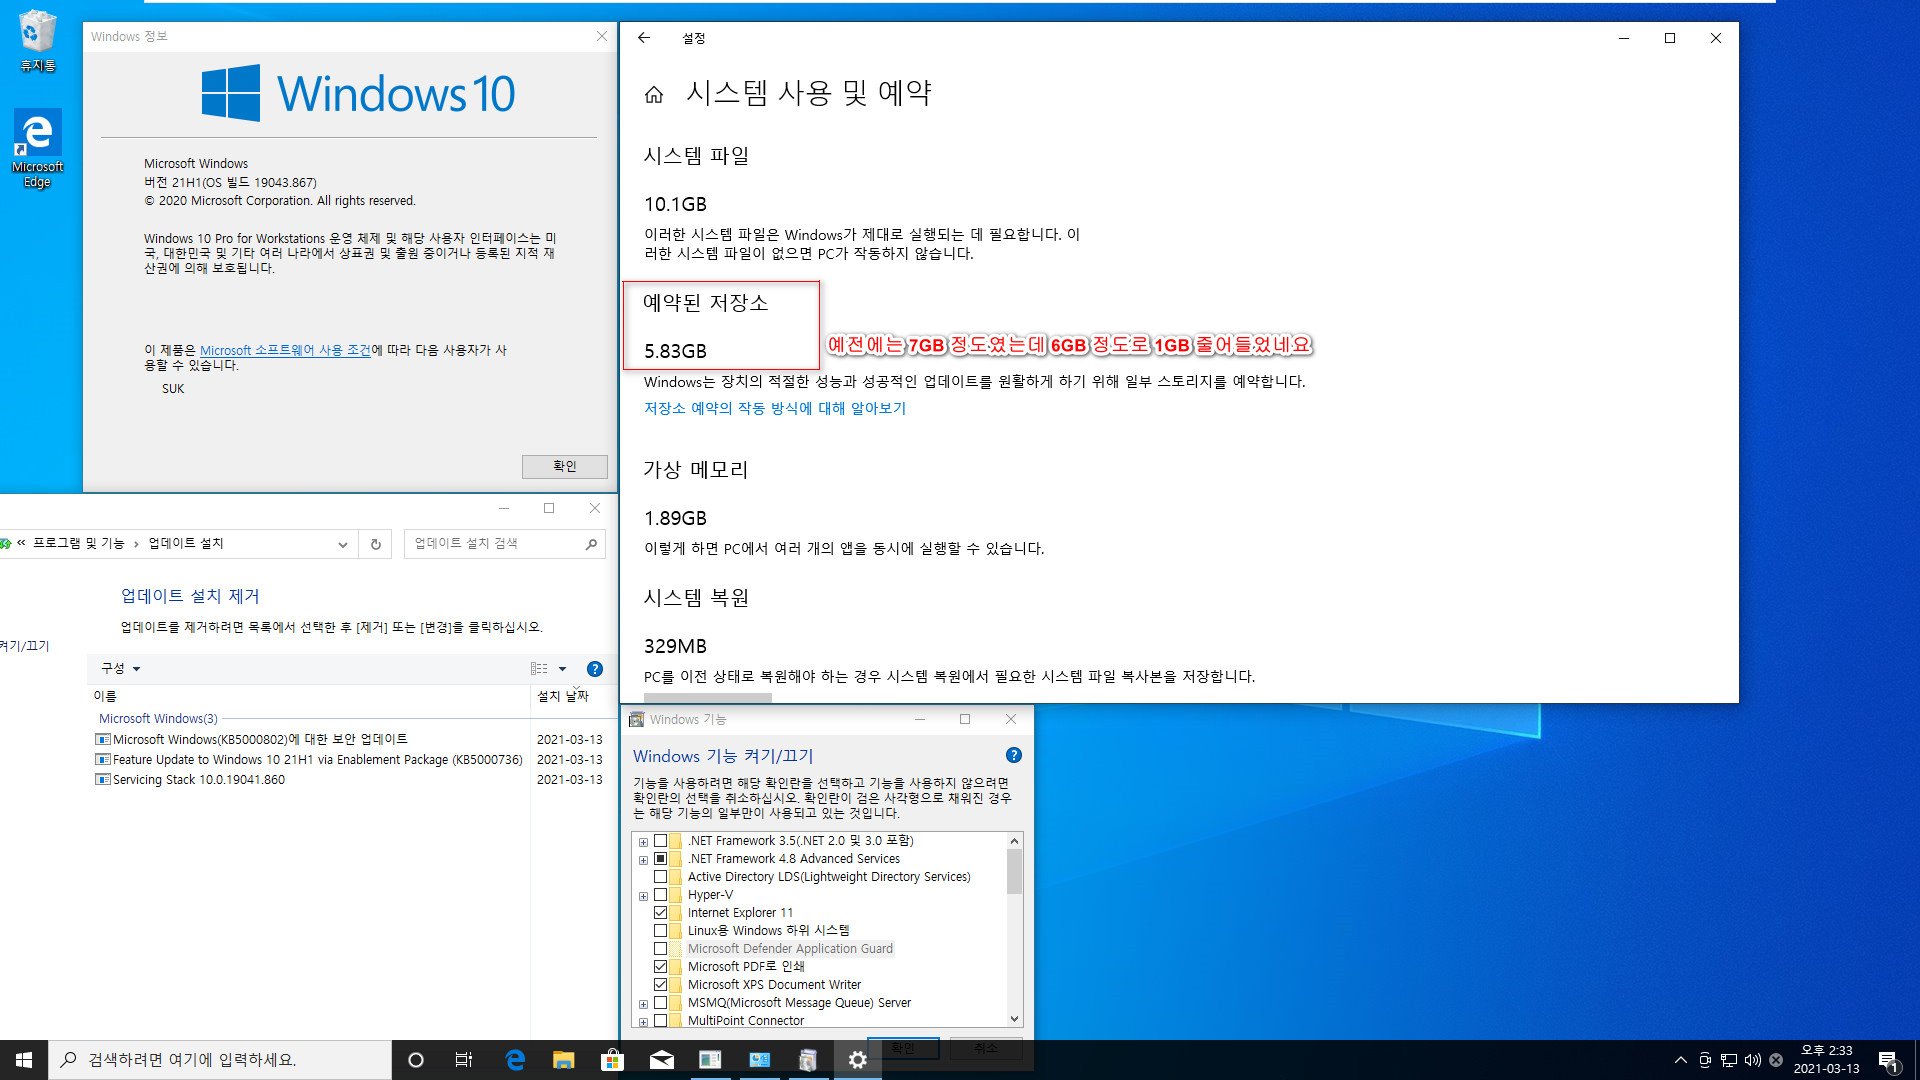 Windows10_InsiderPreview_Client_x64_ko-kr_19043.iso - MS에서 배포한 버전 21H1, 19043.844 빌드 - vmware에 ventoy로 설치 테스트 2021-03-13_143323.jpg